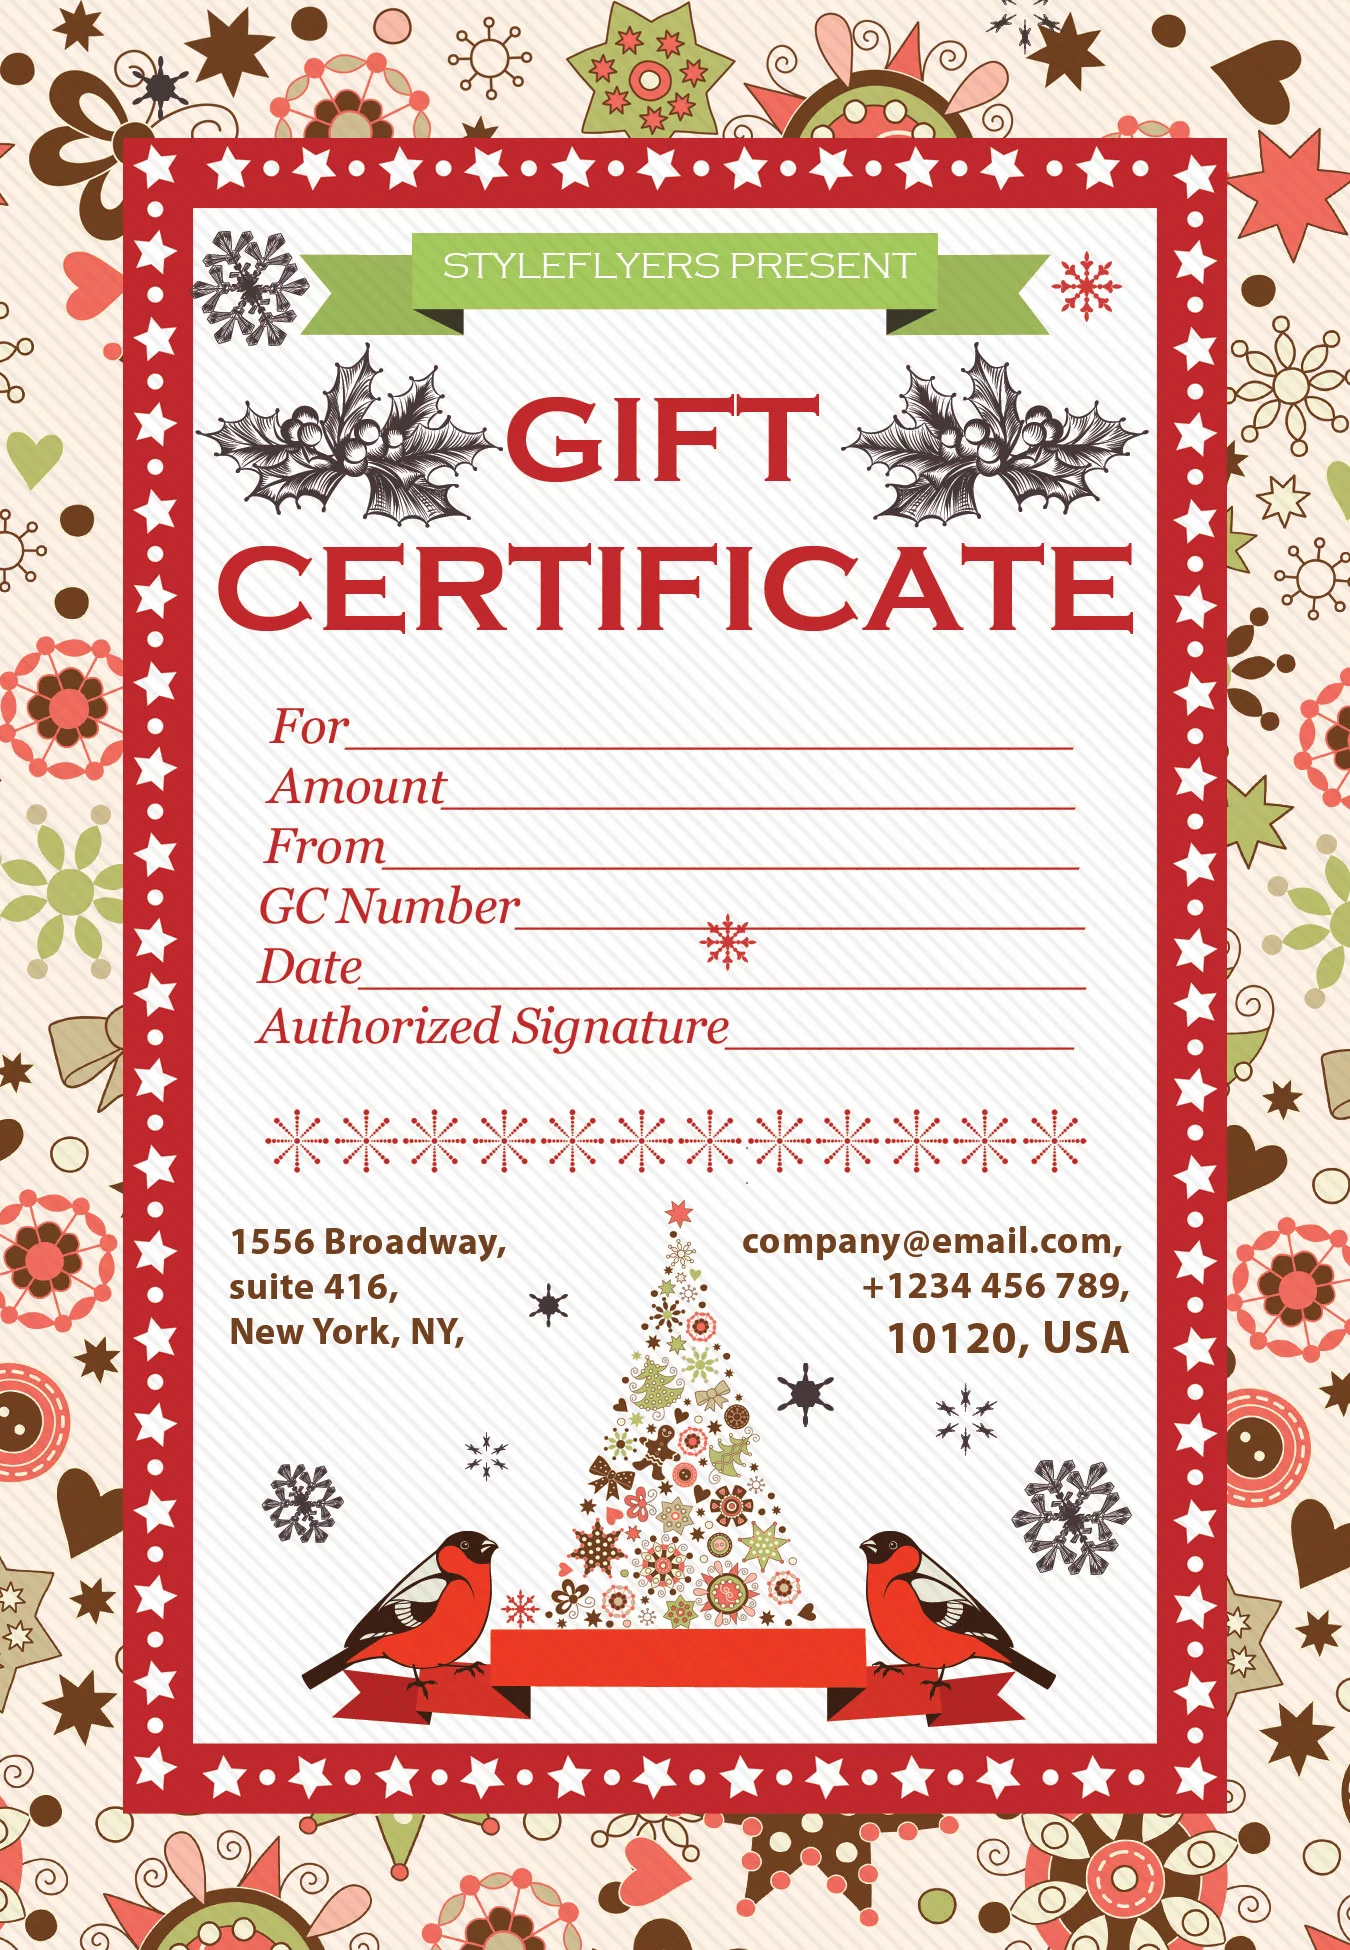 gift-certificate-flyer